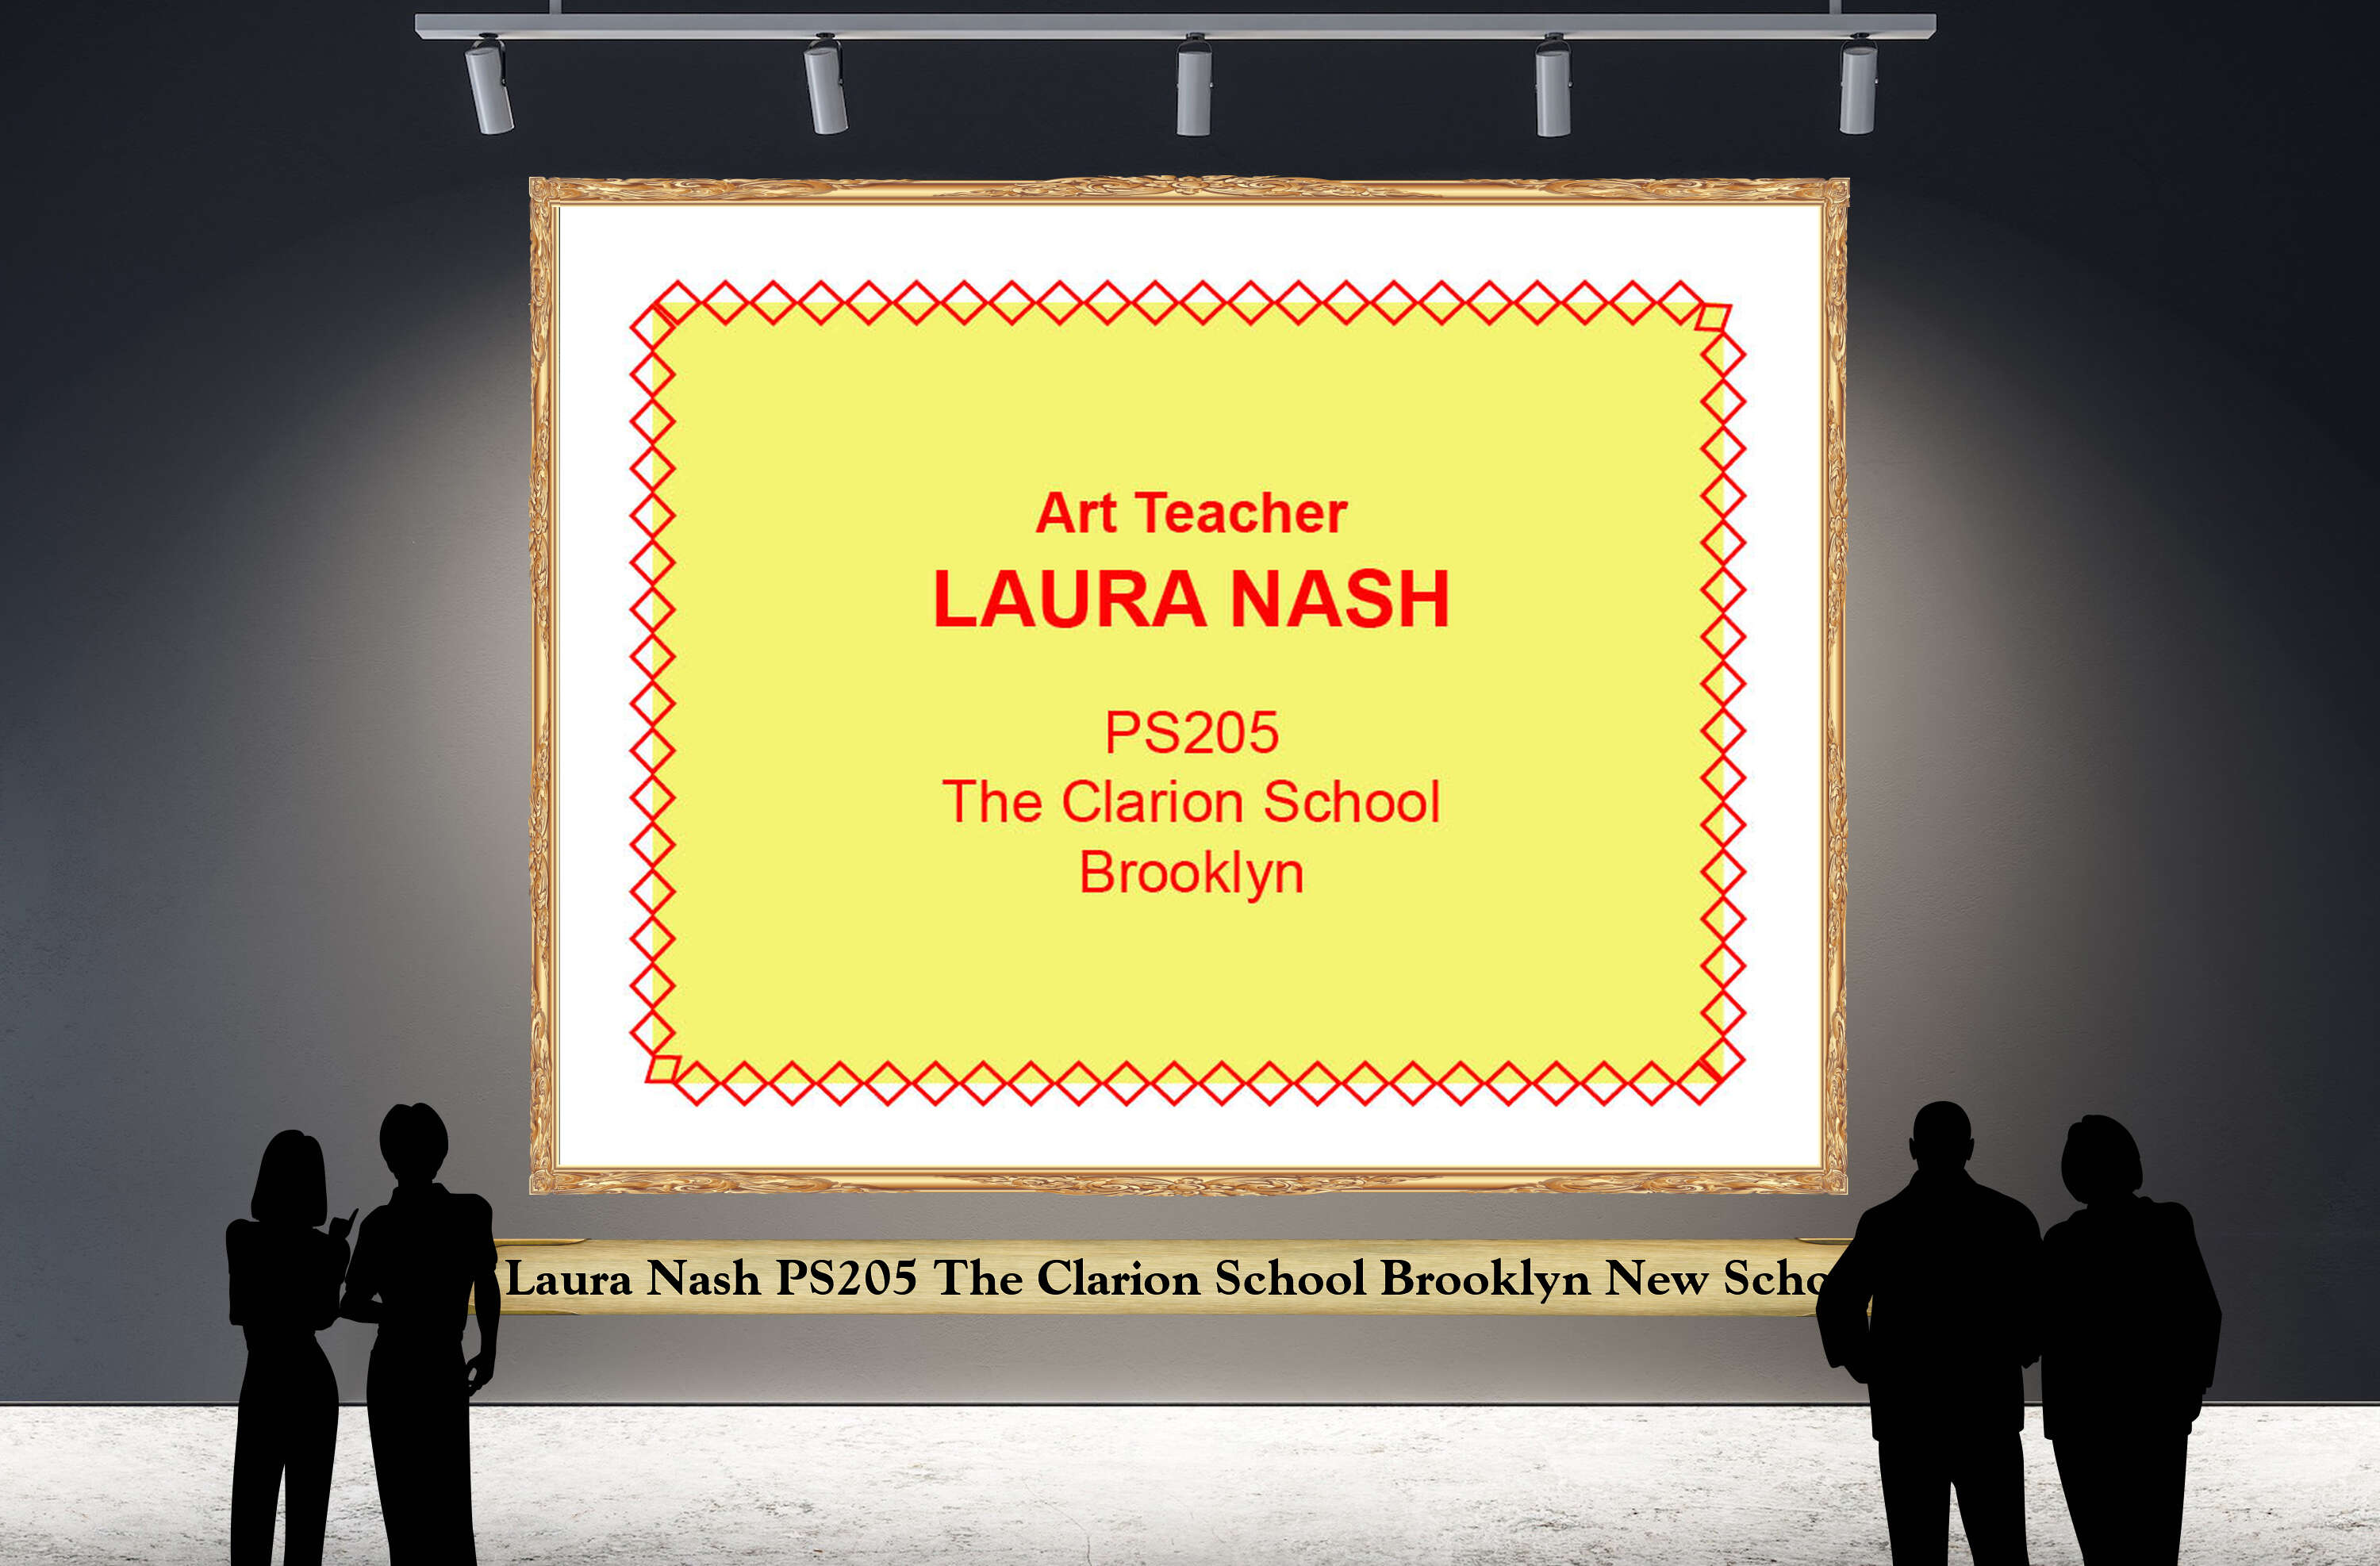 Laura Nash PS205 The Clarion School Brooklyn New School